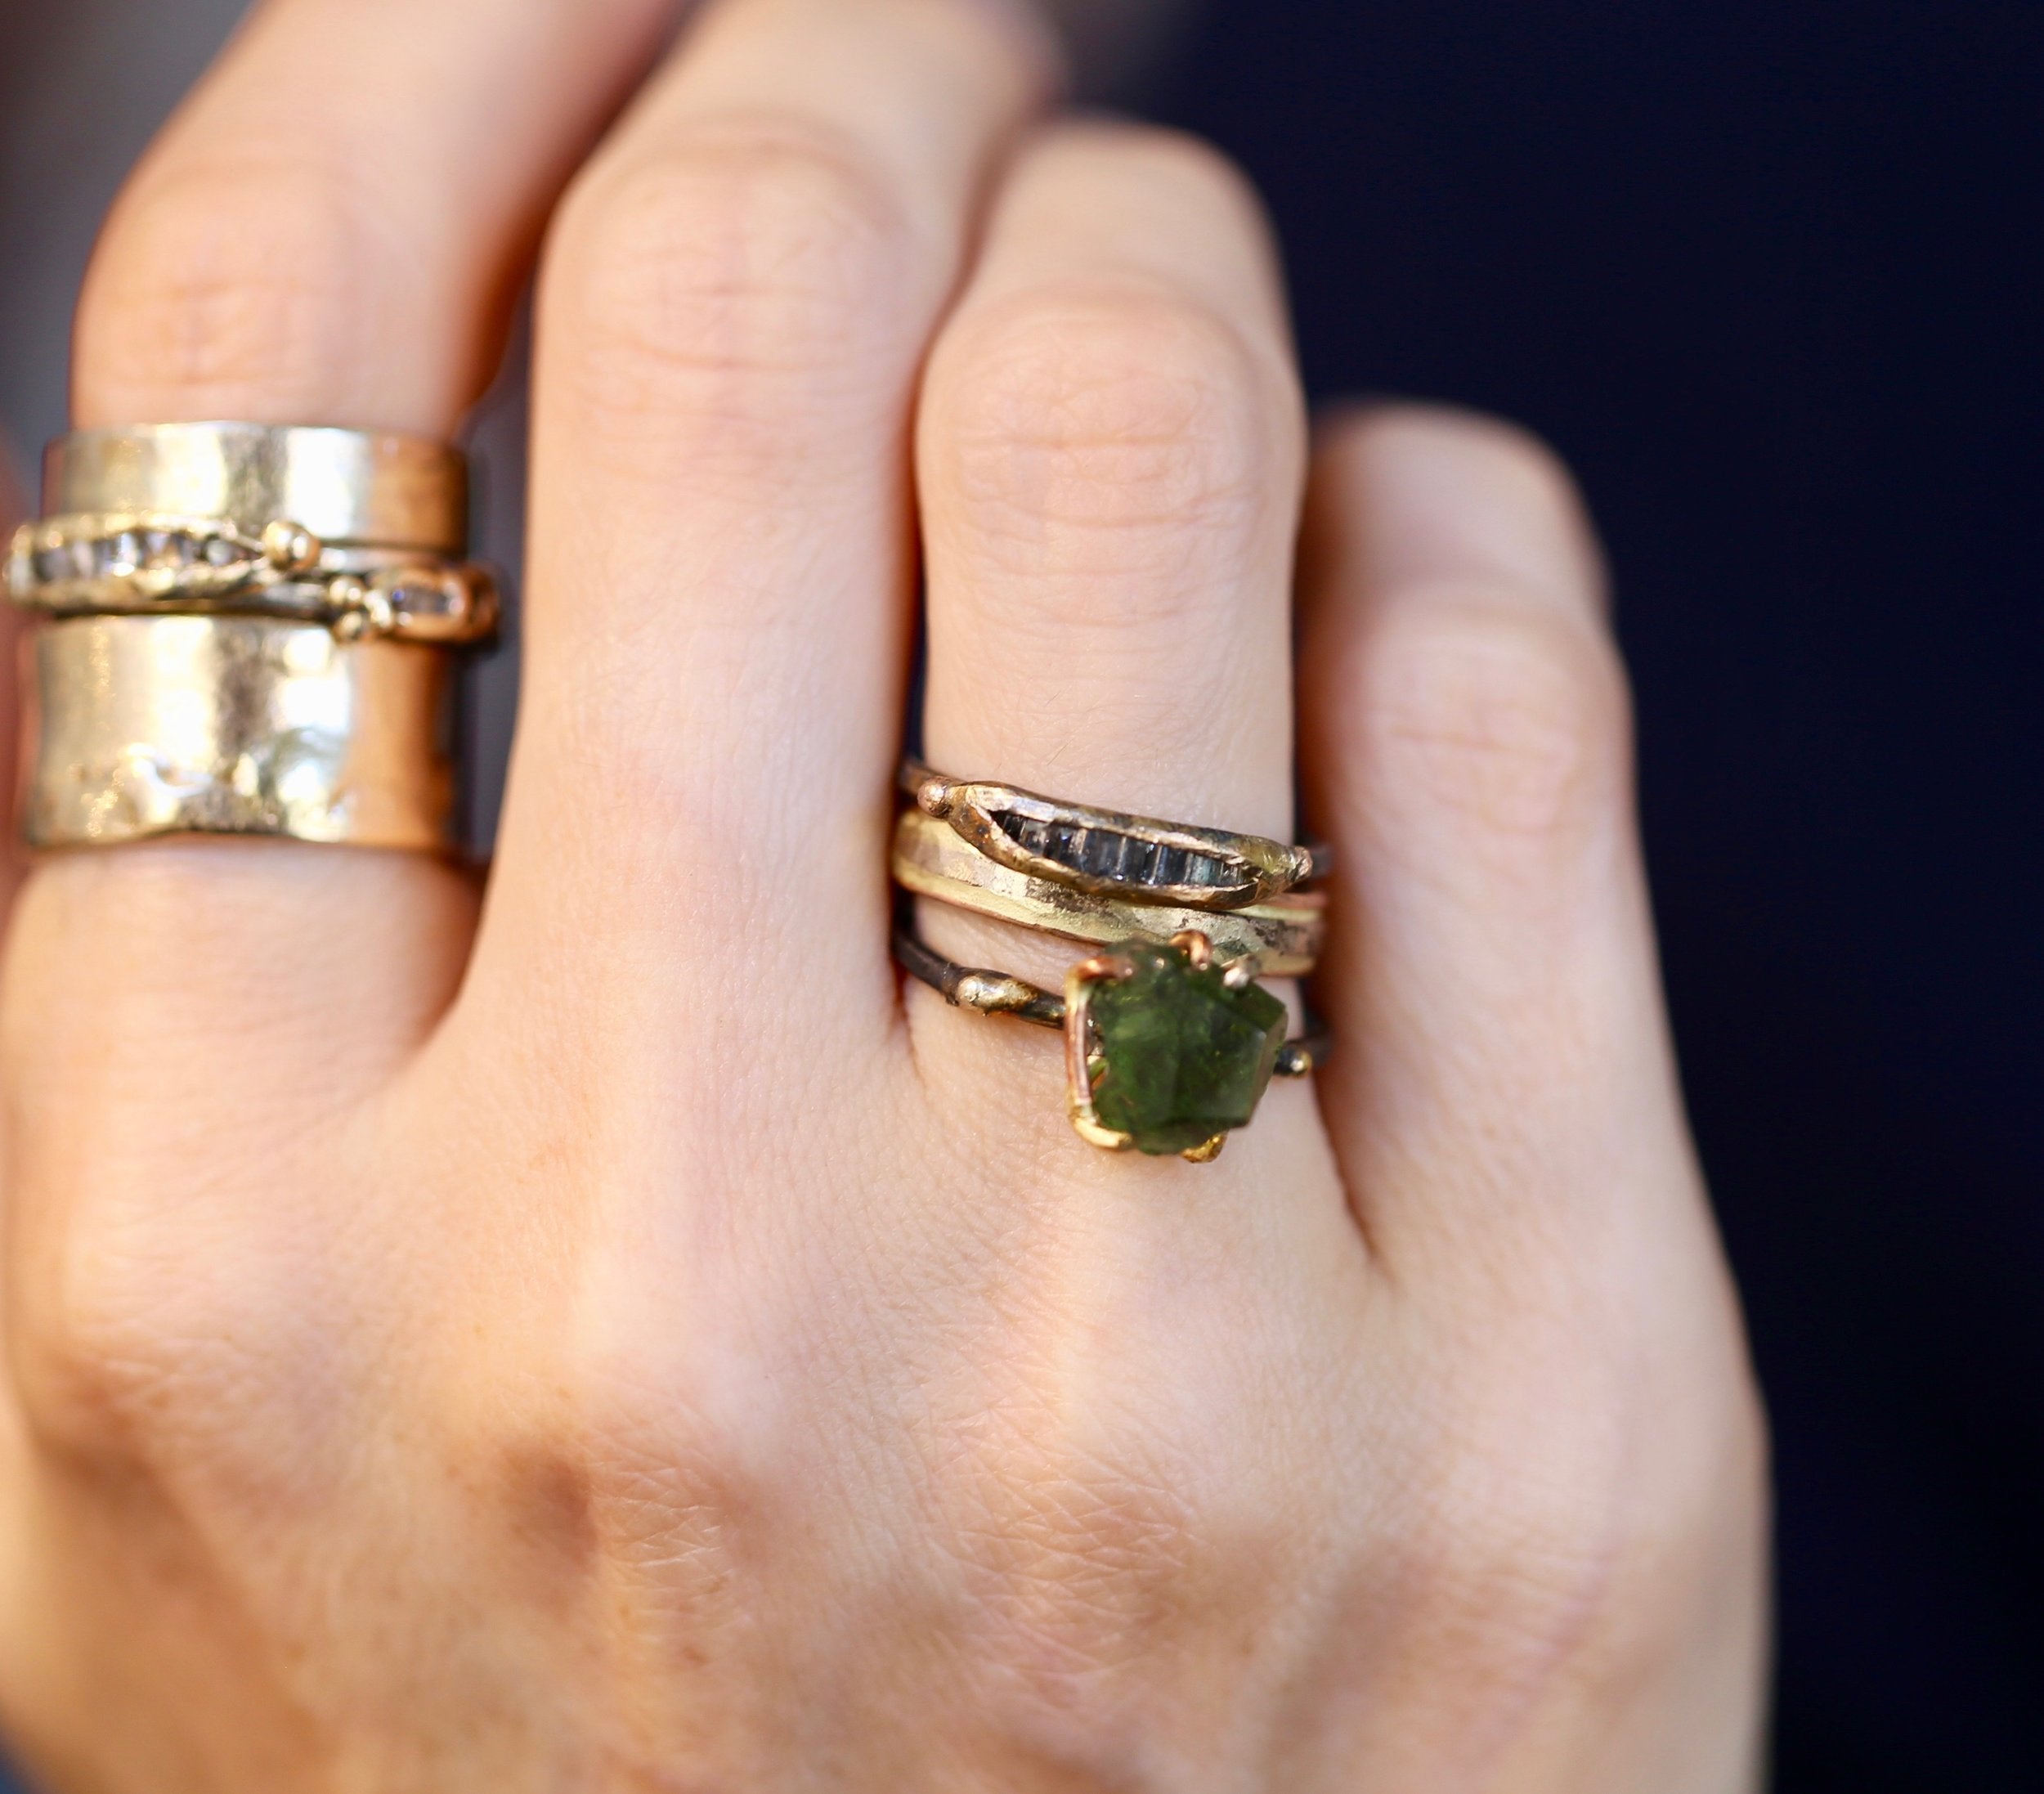 Moldavite ring and diamond ring on hand